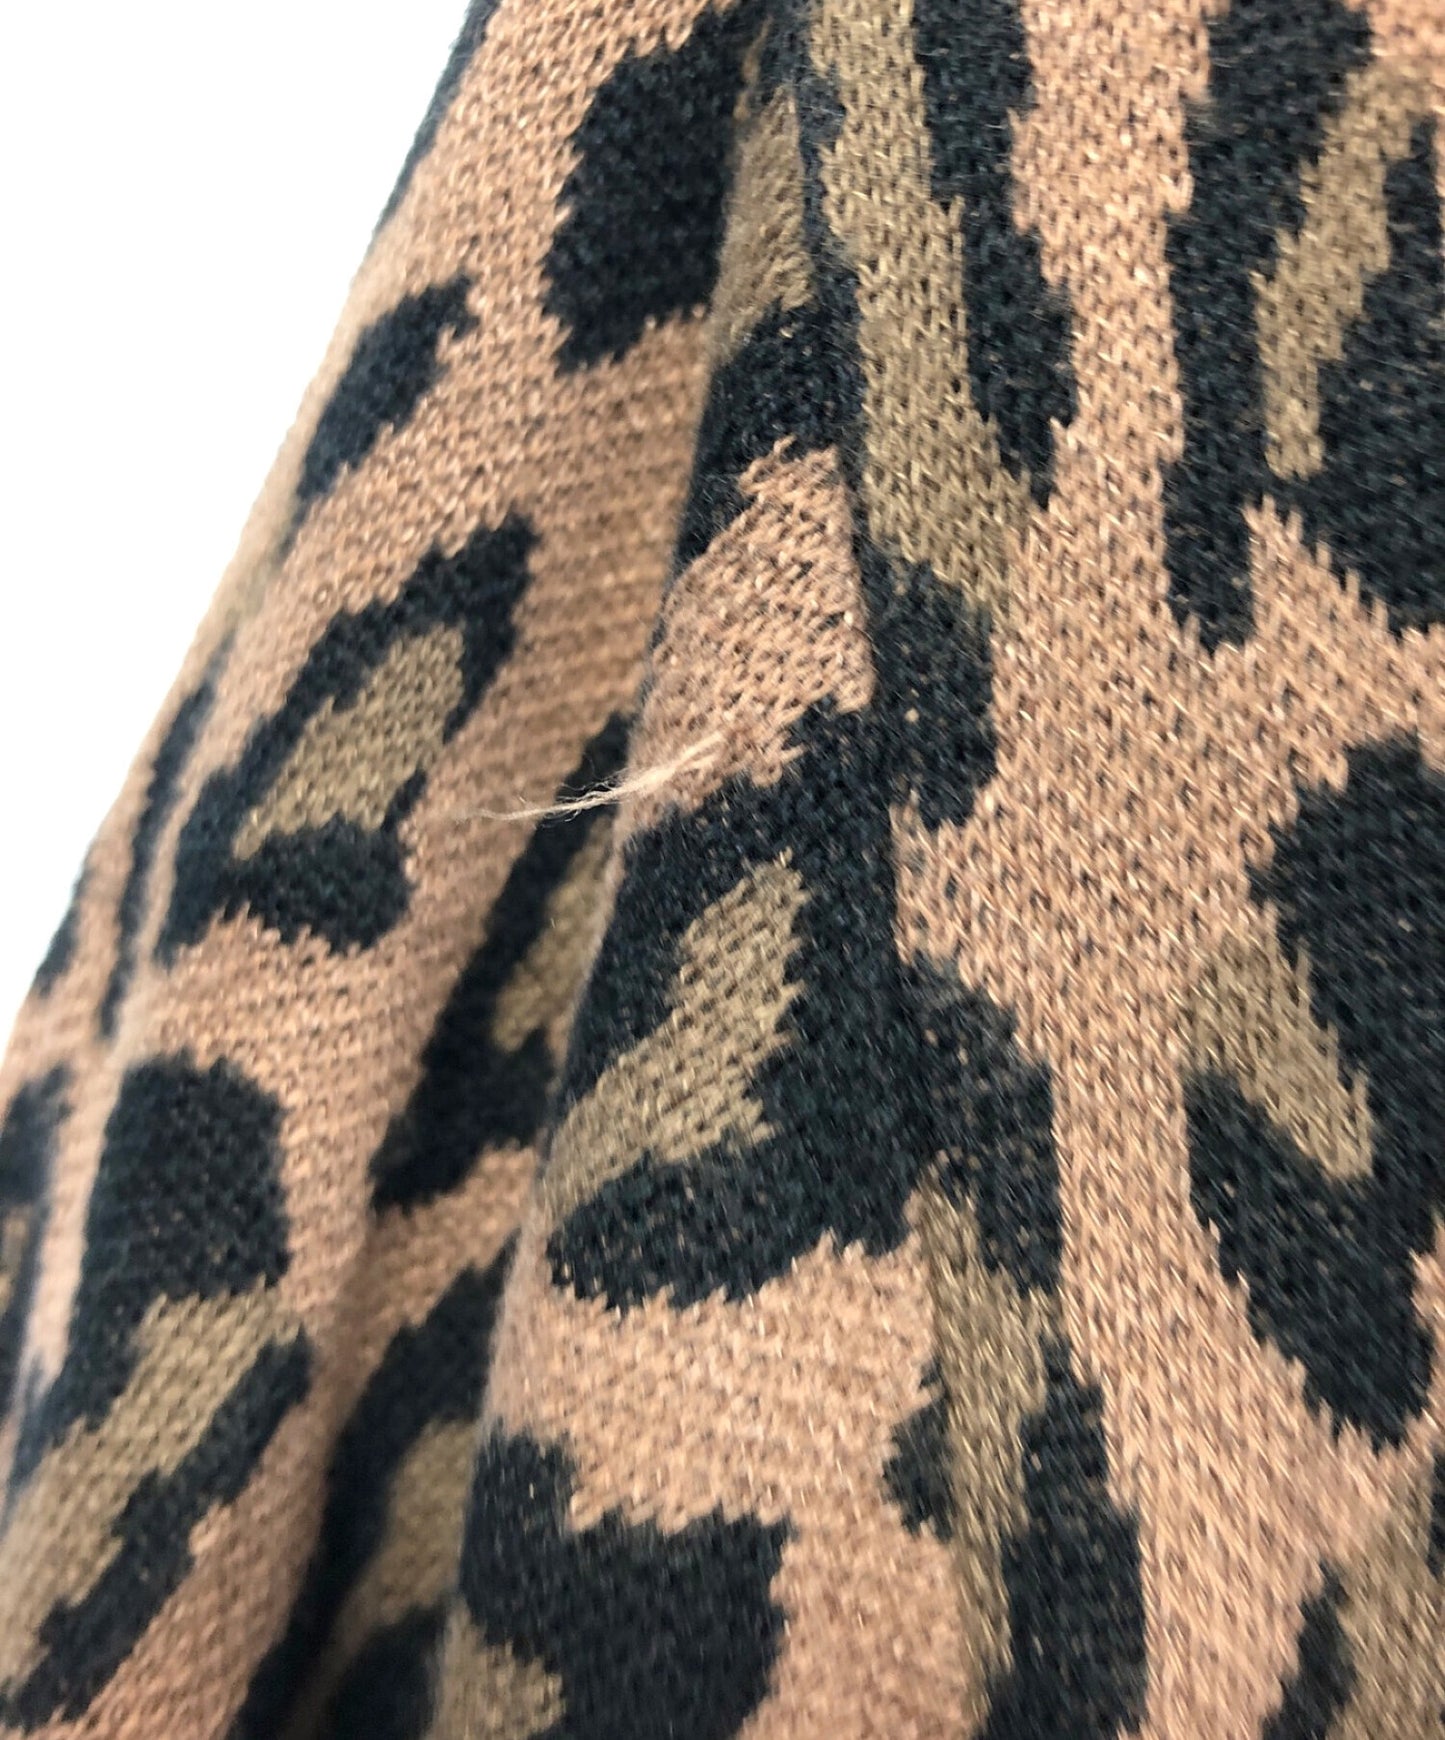 Wacko Maria Leopard编织Jaquard Polo衬衫